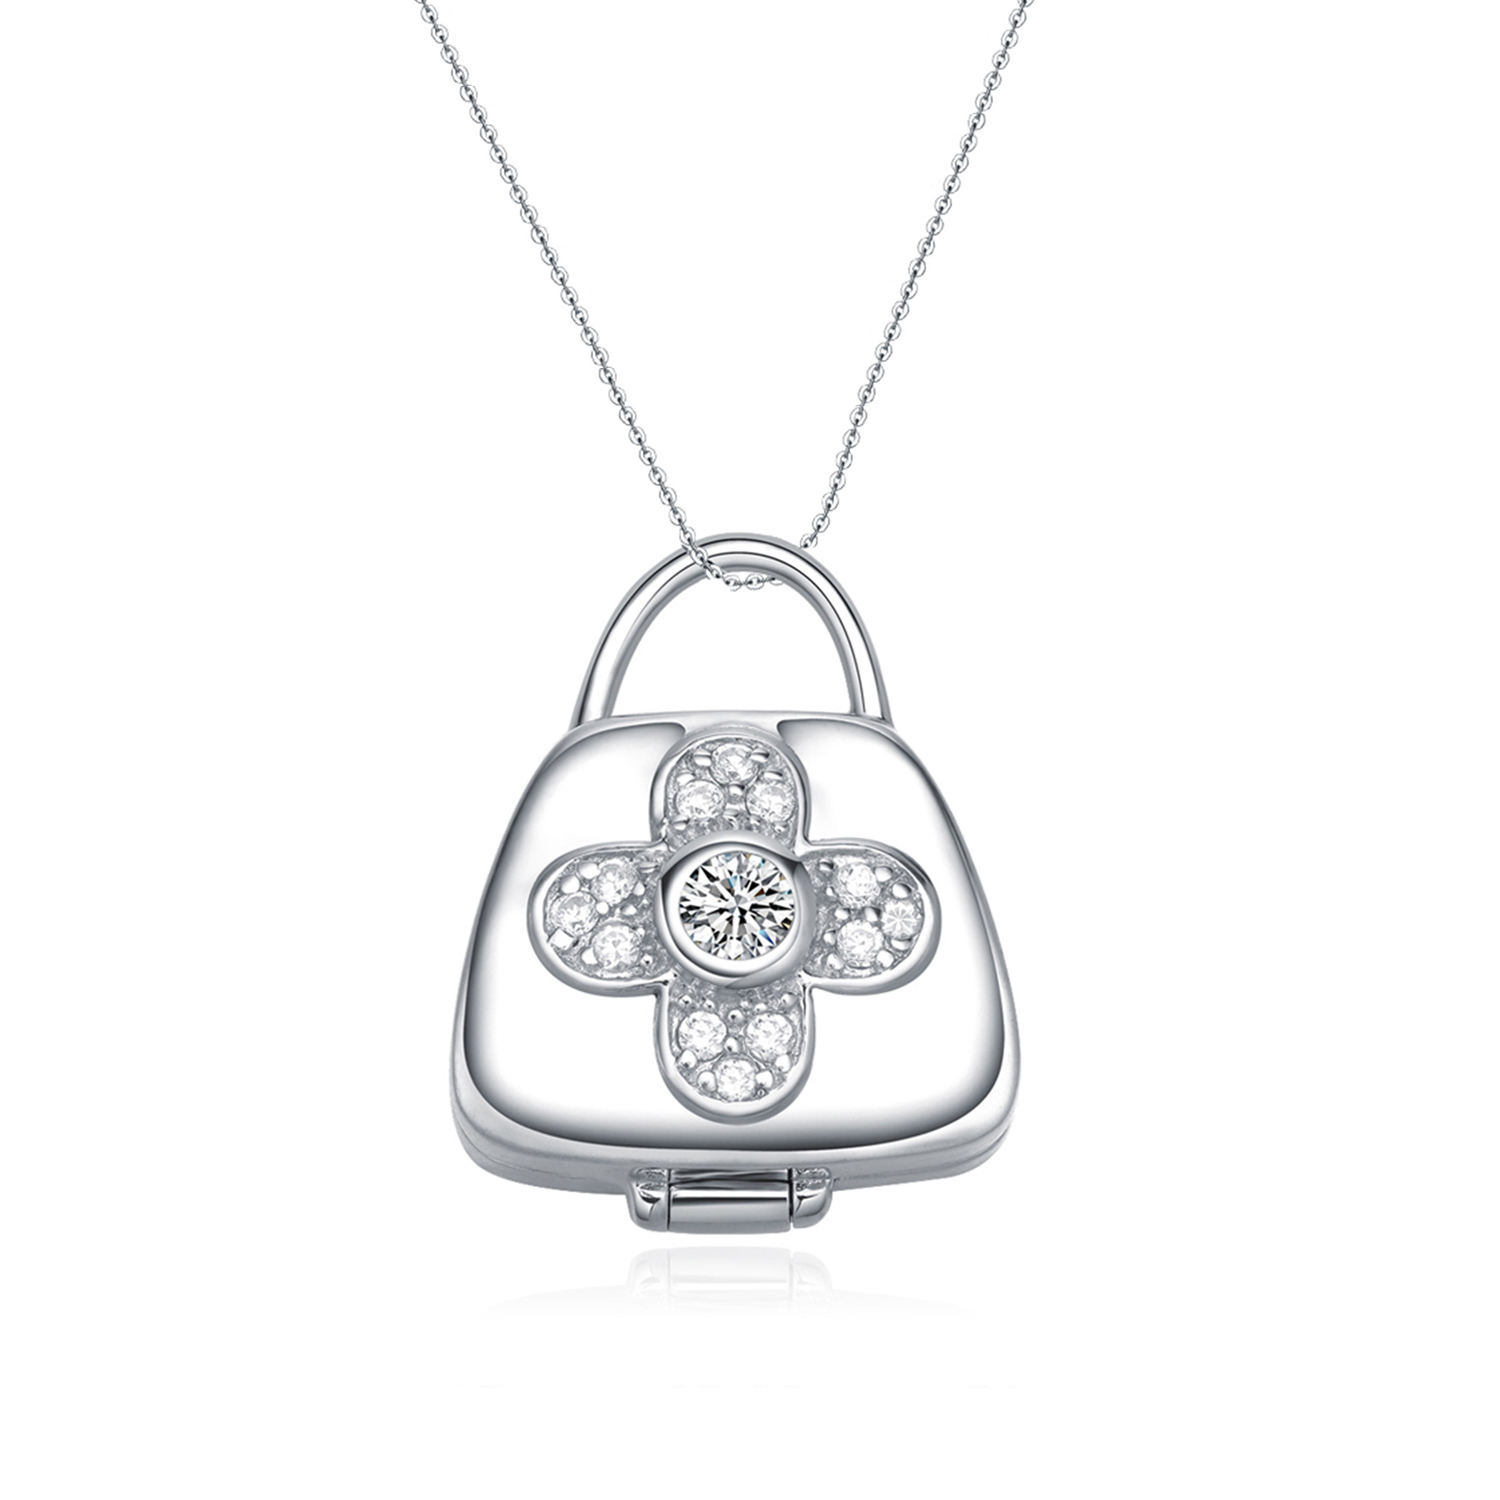 Fashion Latest Sterling Silver Necklace Jewelry CZ Diamond Bag Pendant Necklace Women arabic jewelry(图2)